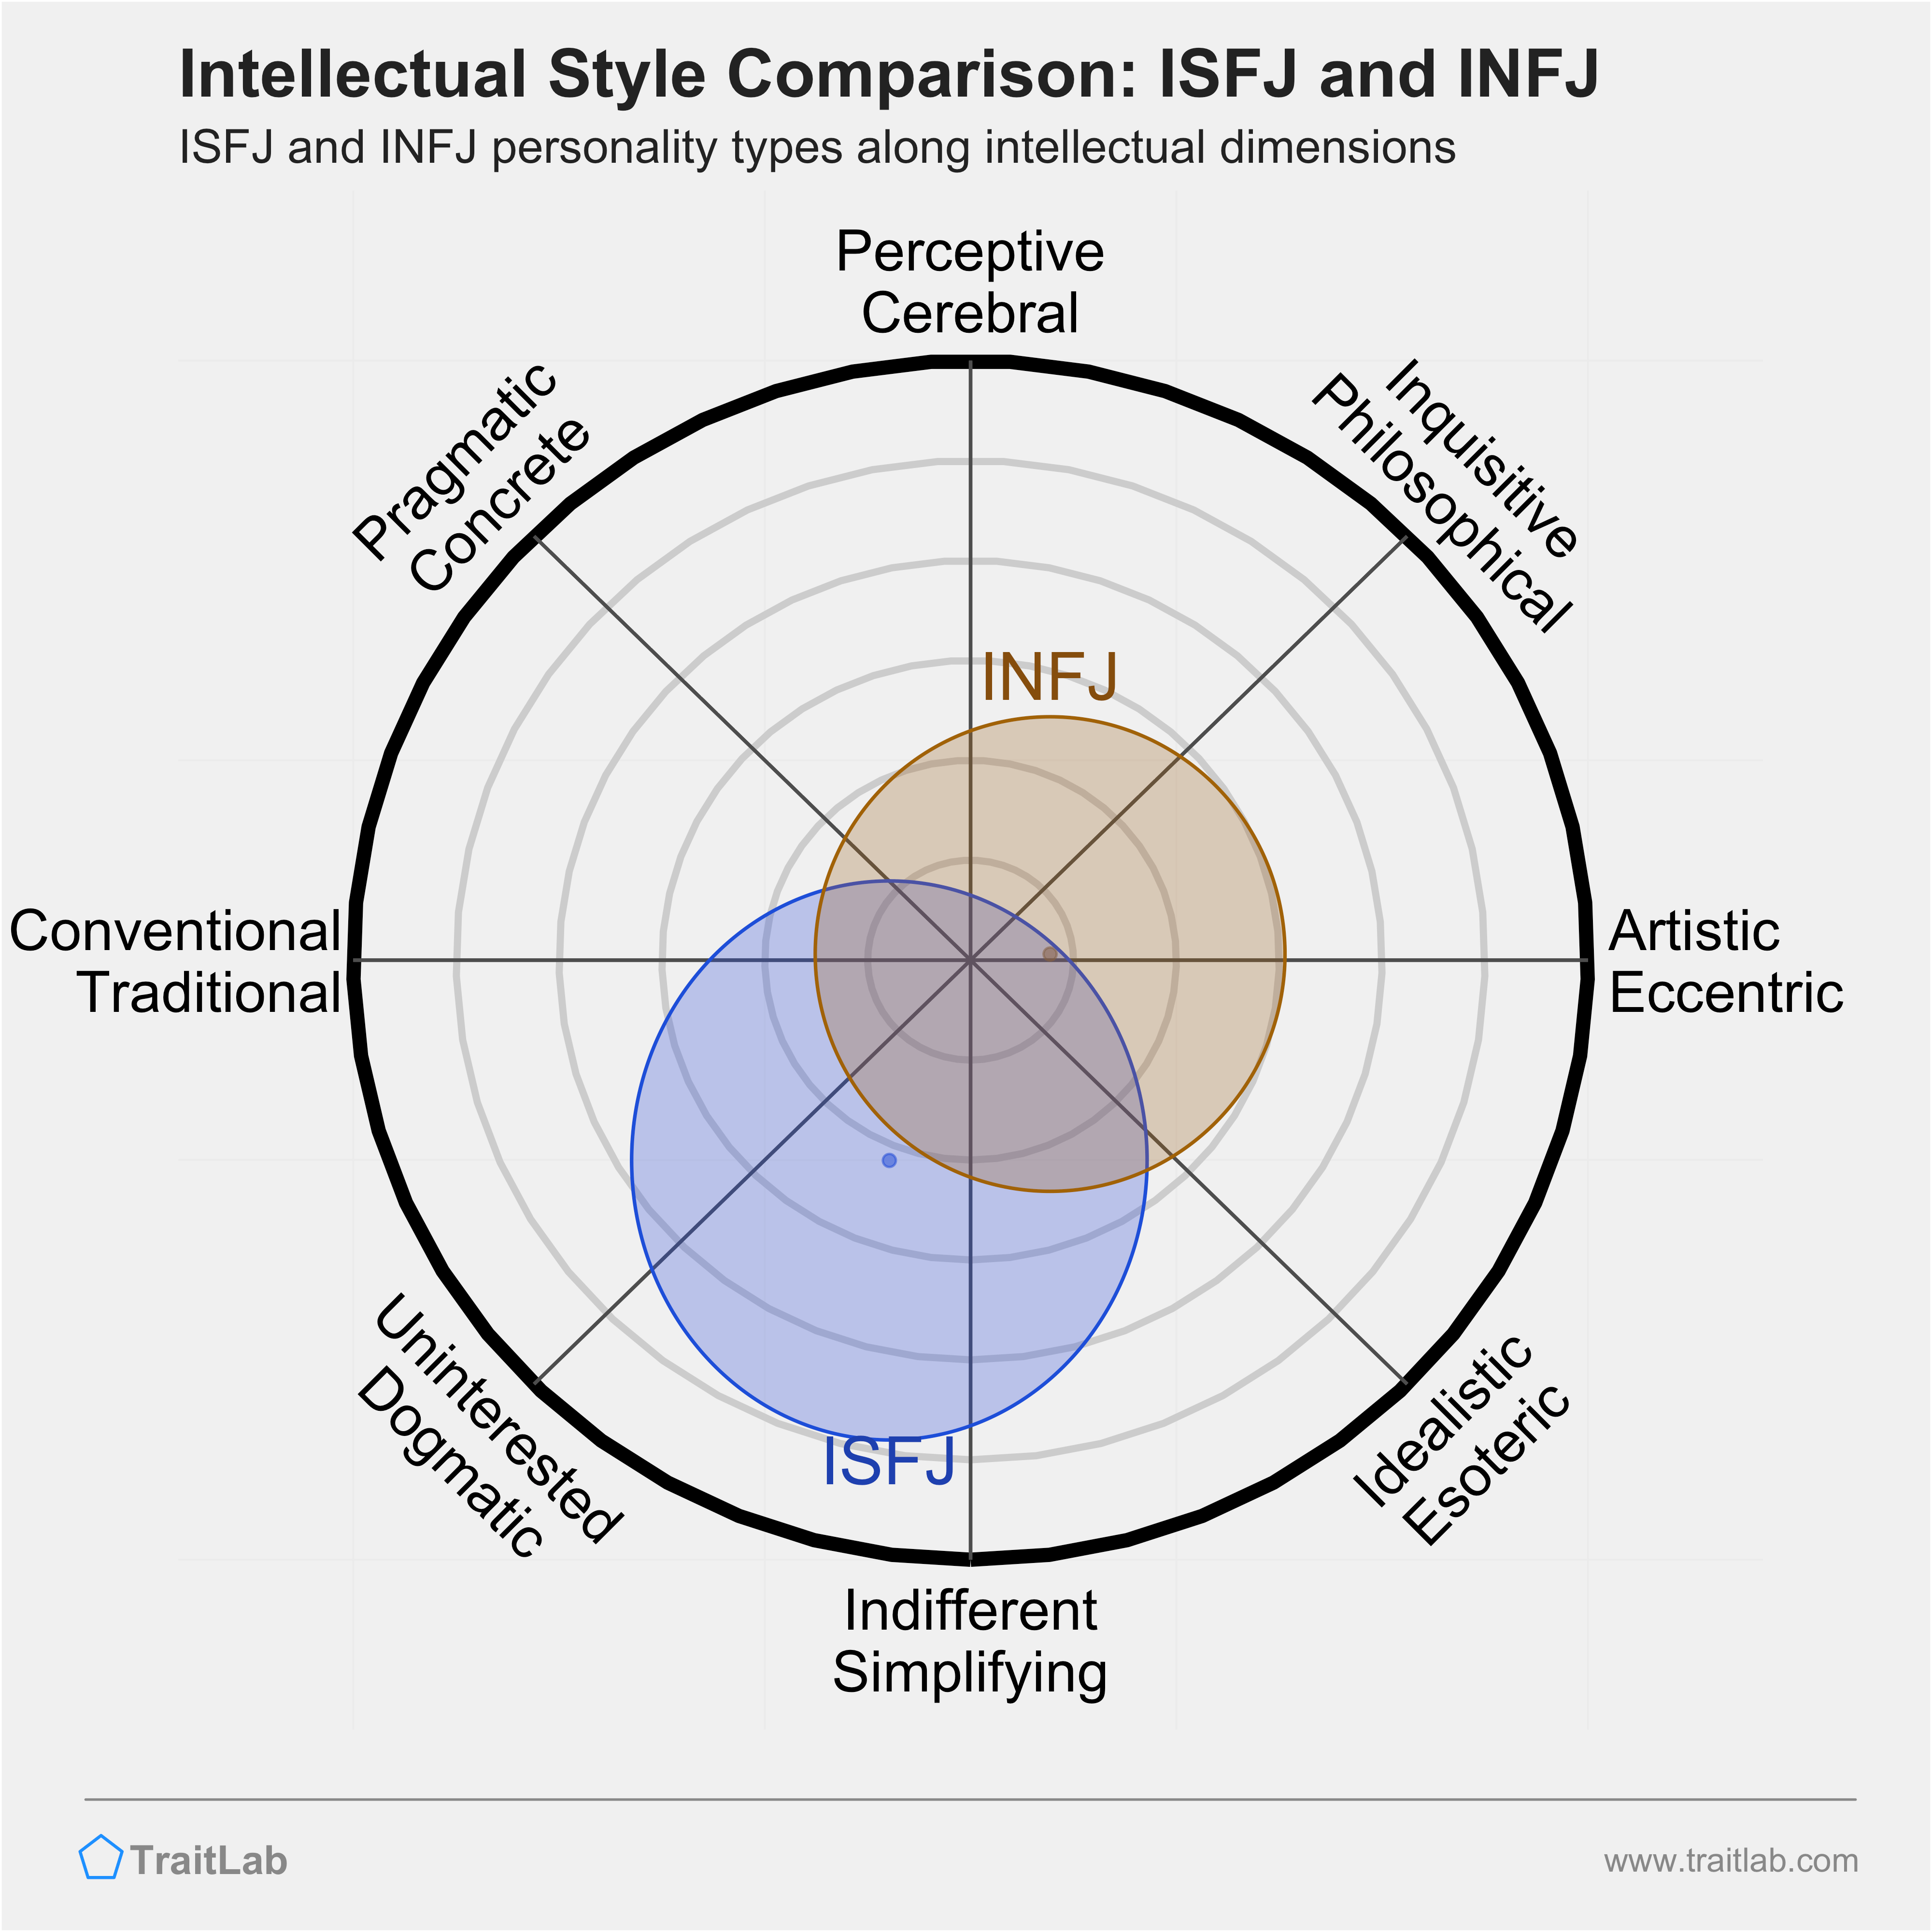 ISFJ and INFJ comparison across intellectual dimensions